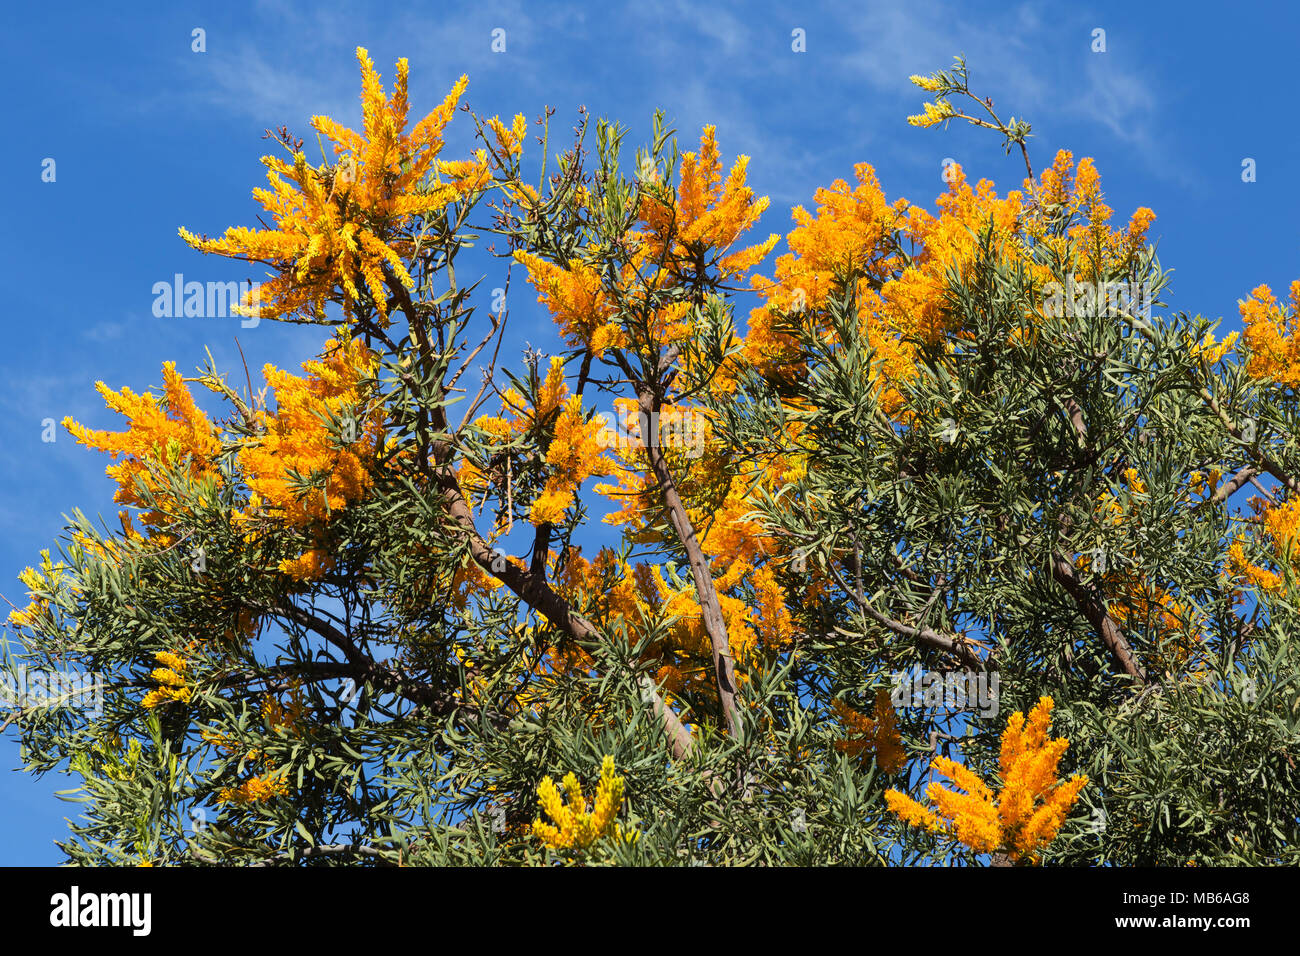 The beautiful yellow flowers of the WA Christmas Tree (Nuytsia floribunda) in bloom at the Pinnaroo Valley Memorial Park, Perth, Western Australia Stock Photo